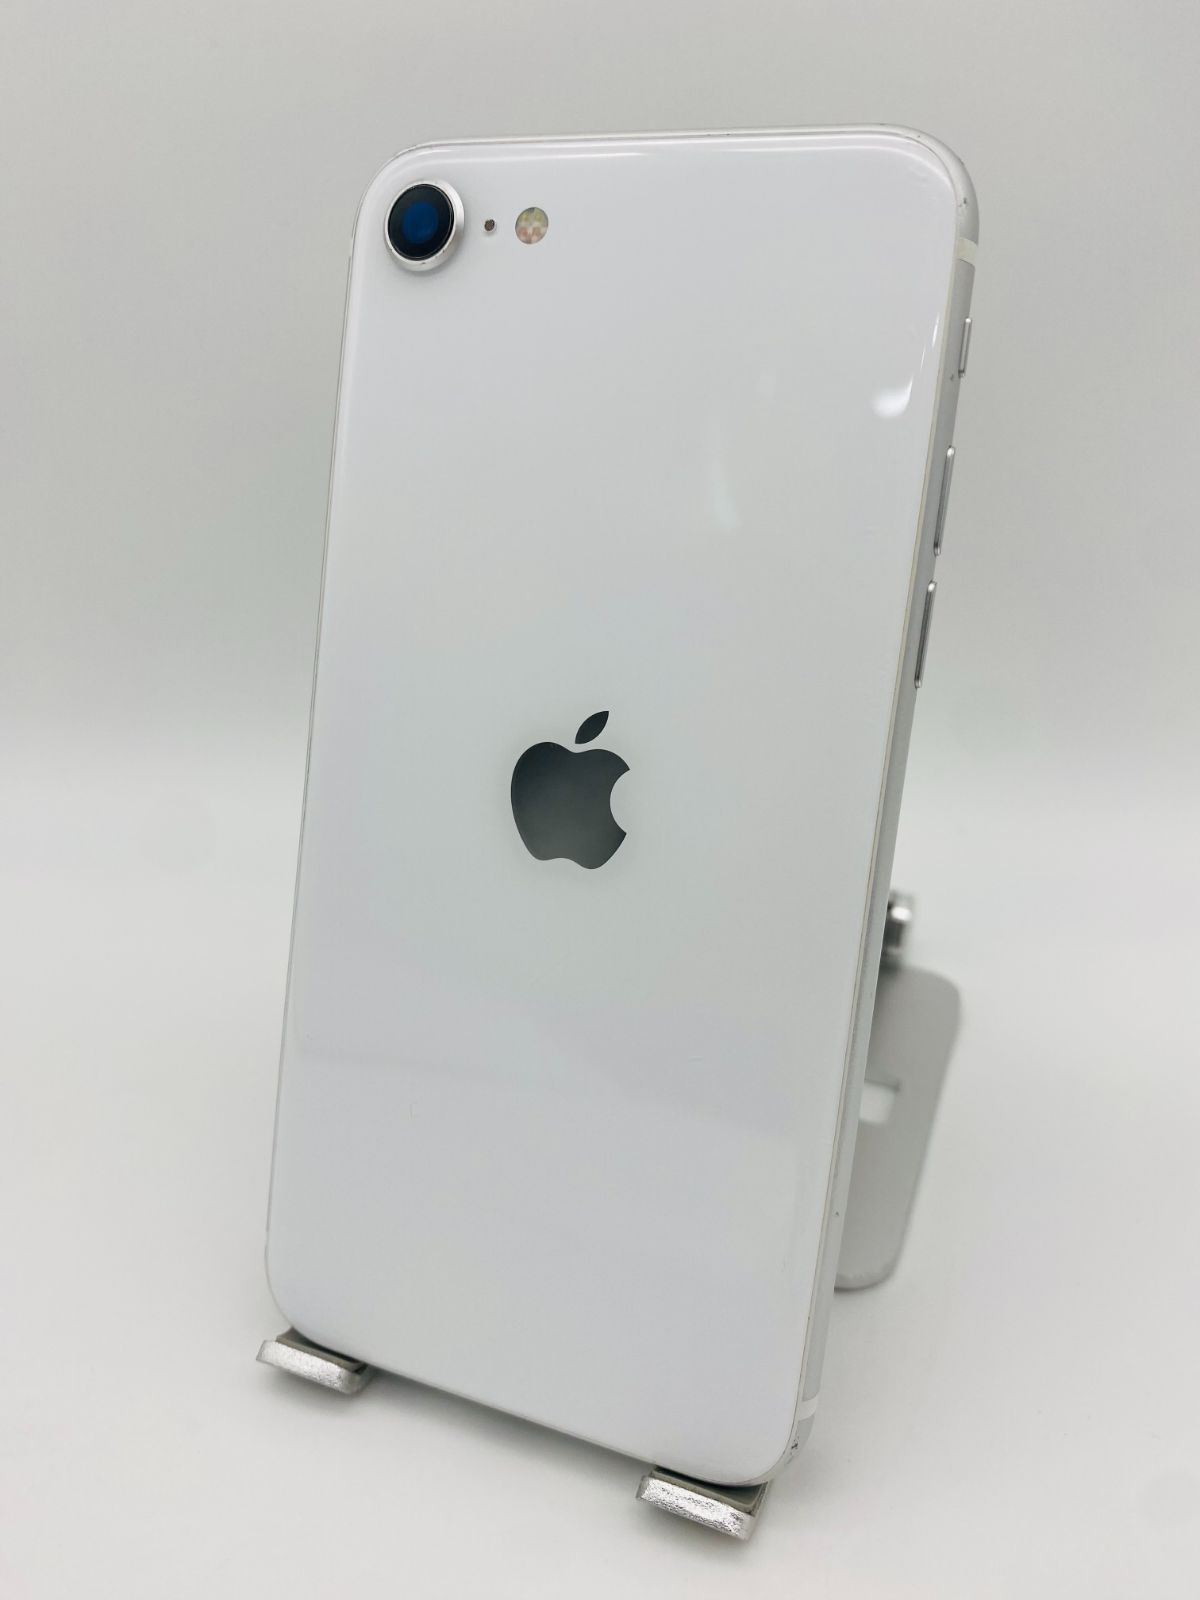 iPhone SE 第2世代 64GB ホワイト/シムフリー/新品バッテリー100%/新品 